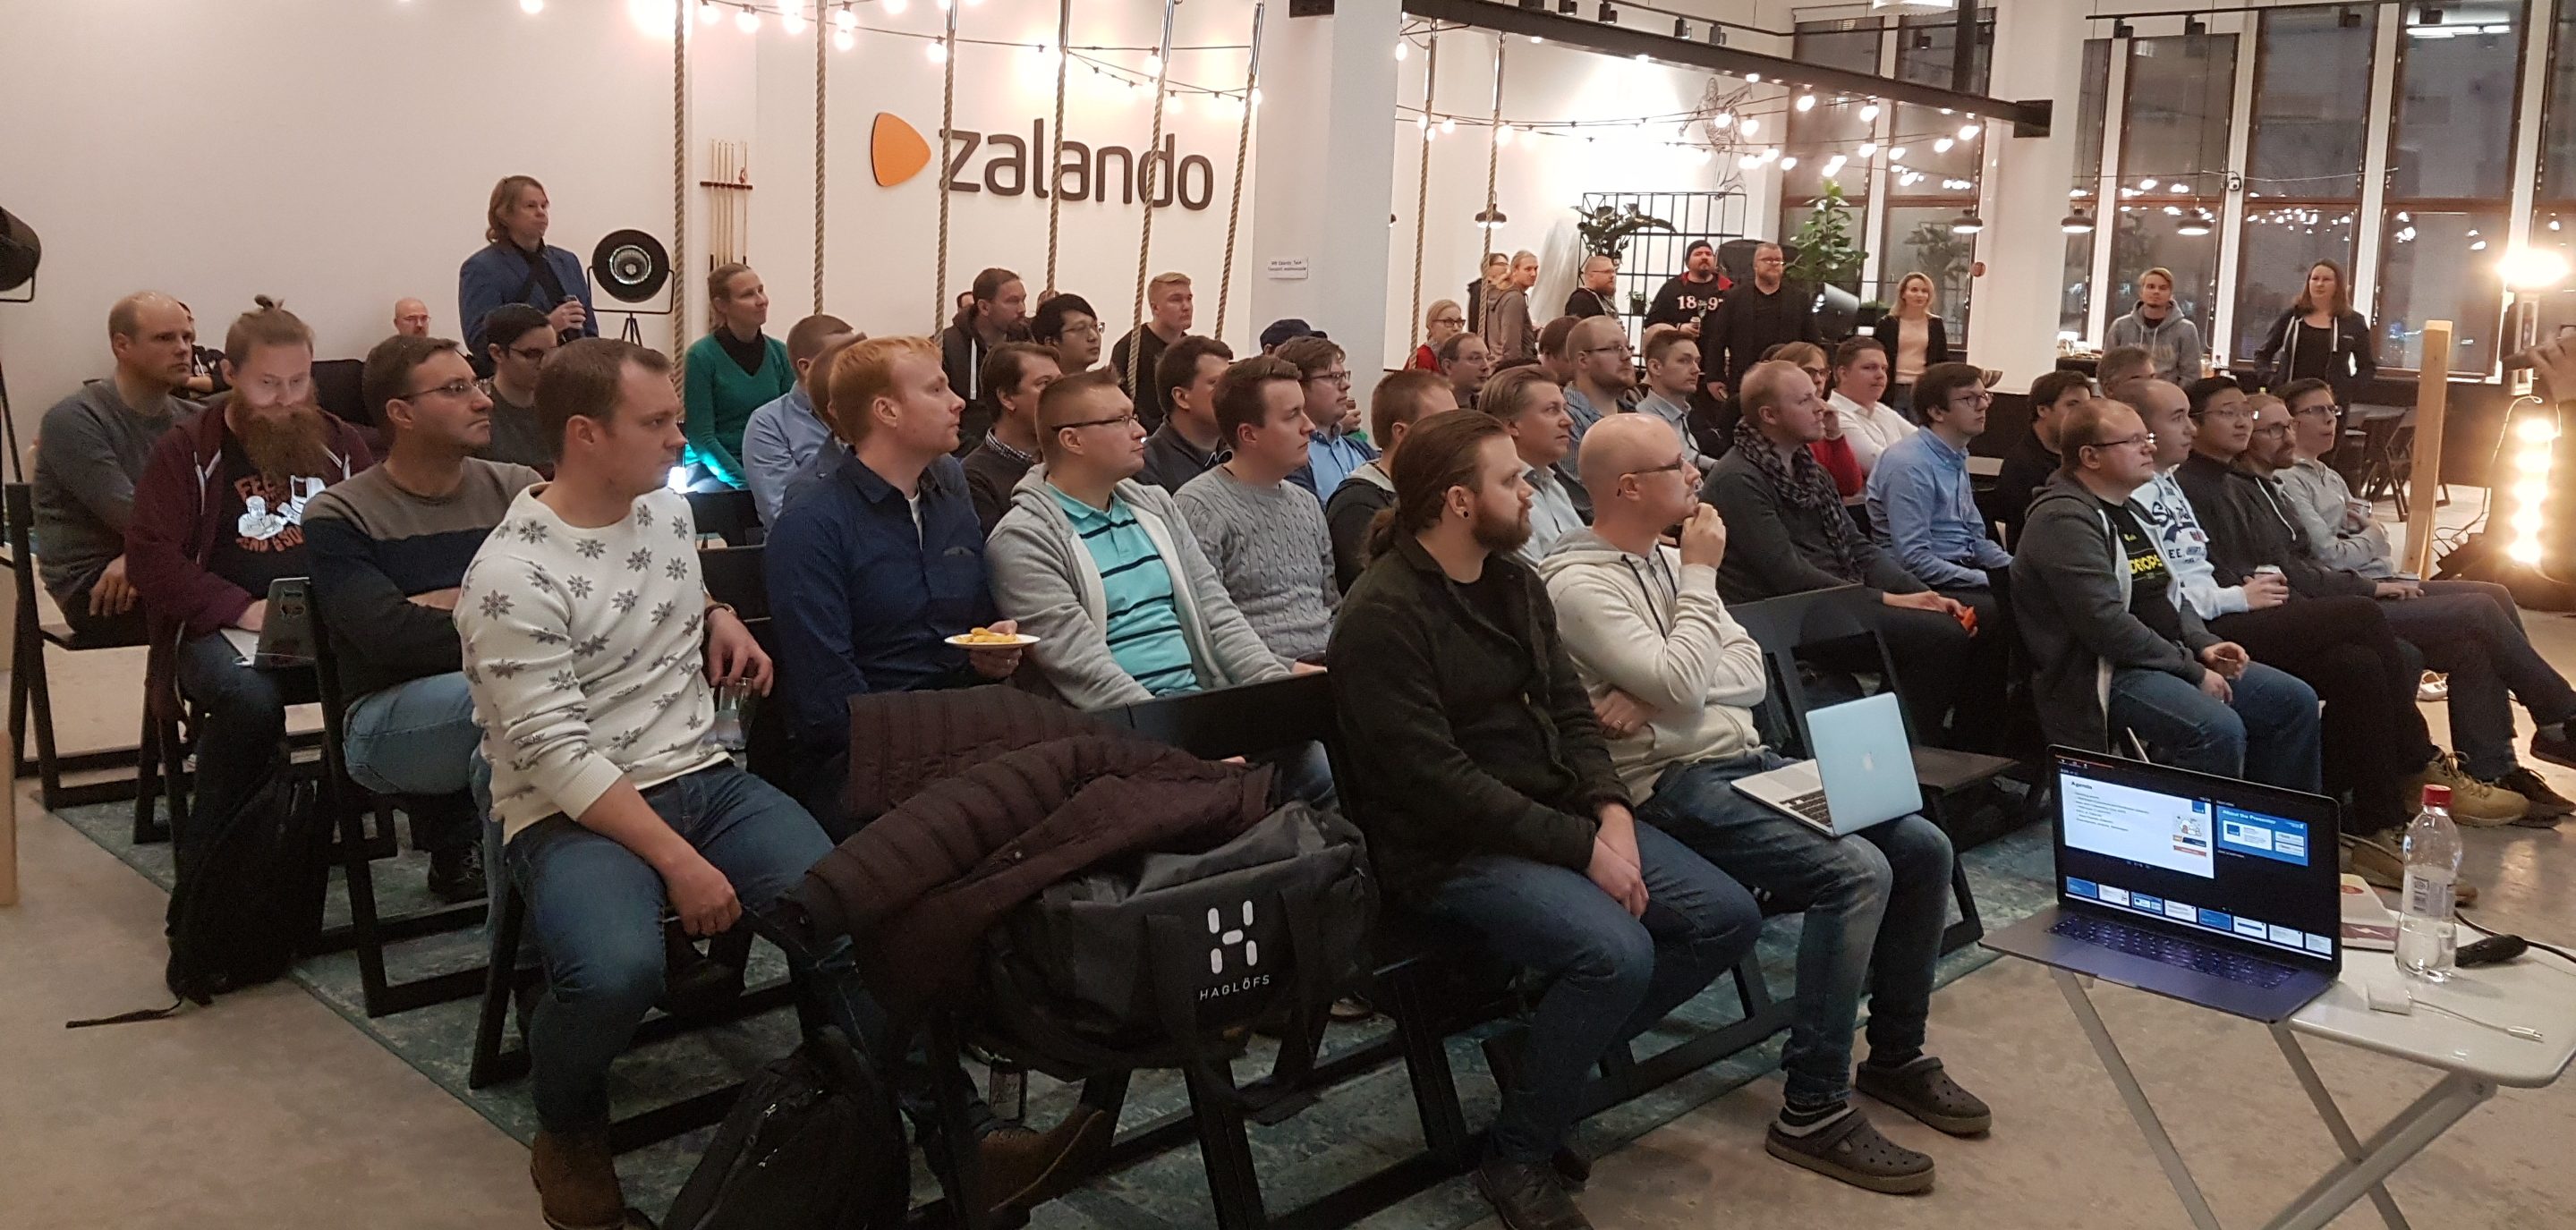 AWS User Group Finland October Meetup – Sponsored by Zalando